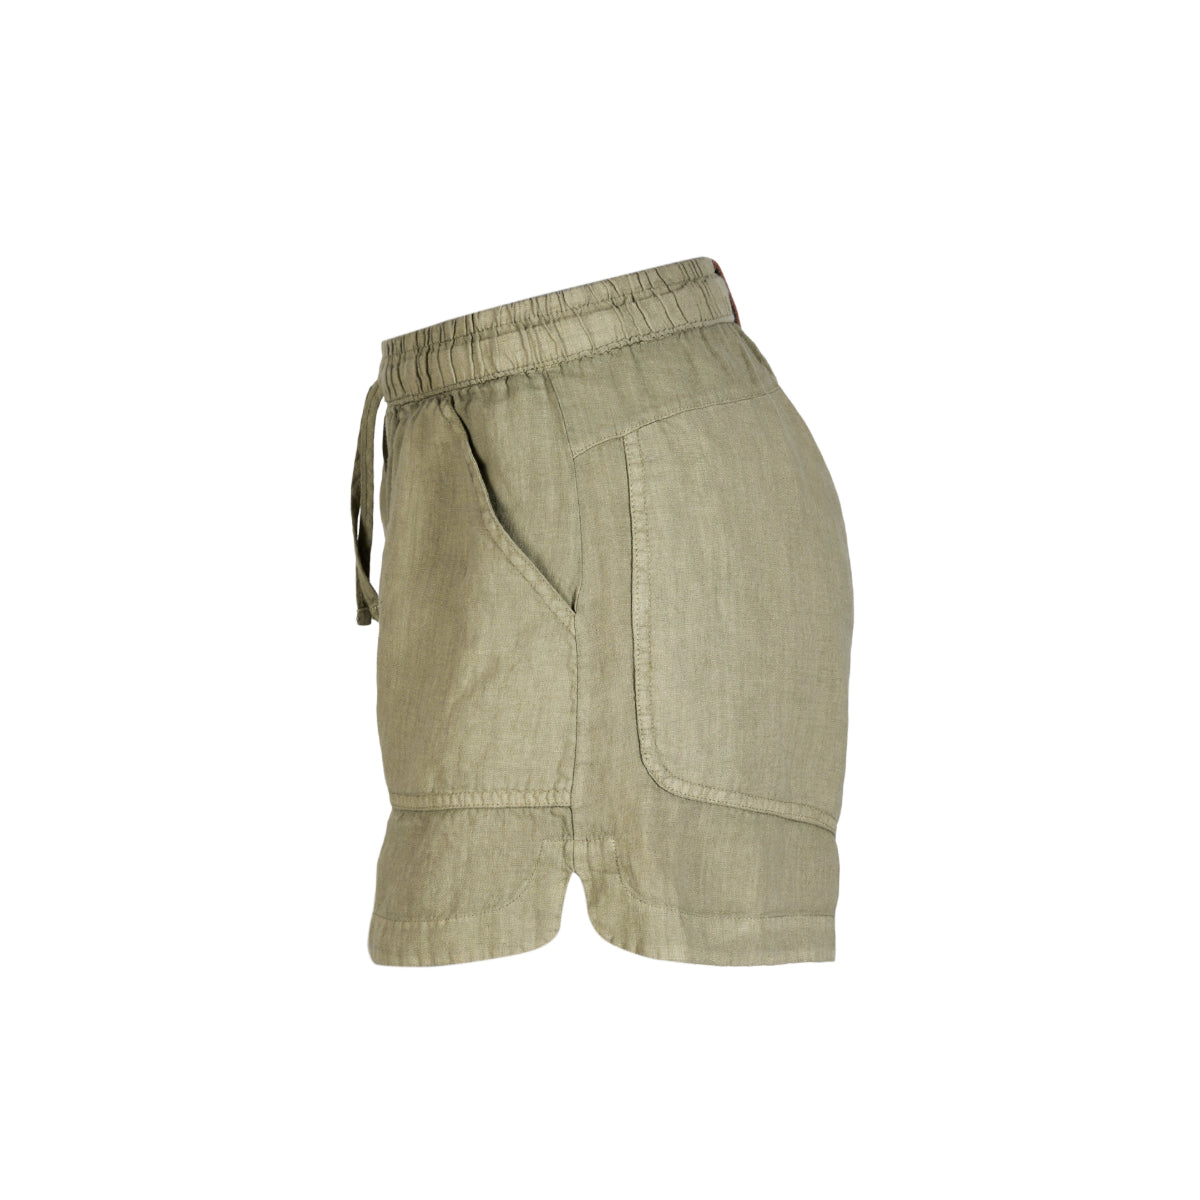 Amundsen Sports - Women's Safari Linen Garment Dyed Shorts - Olive Ash